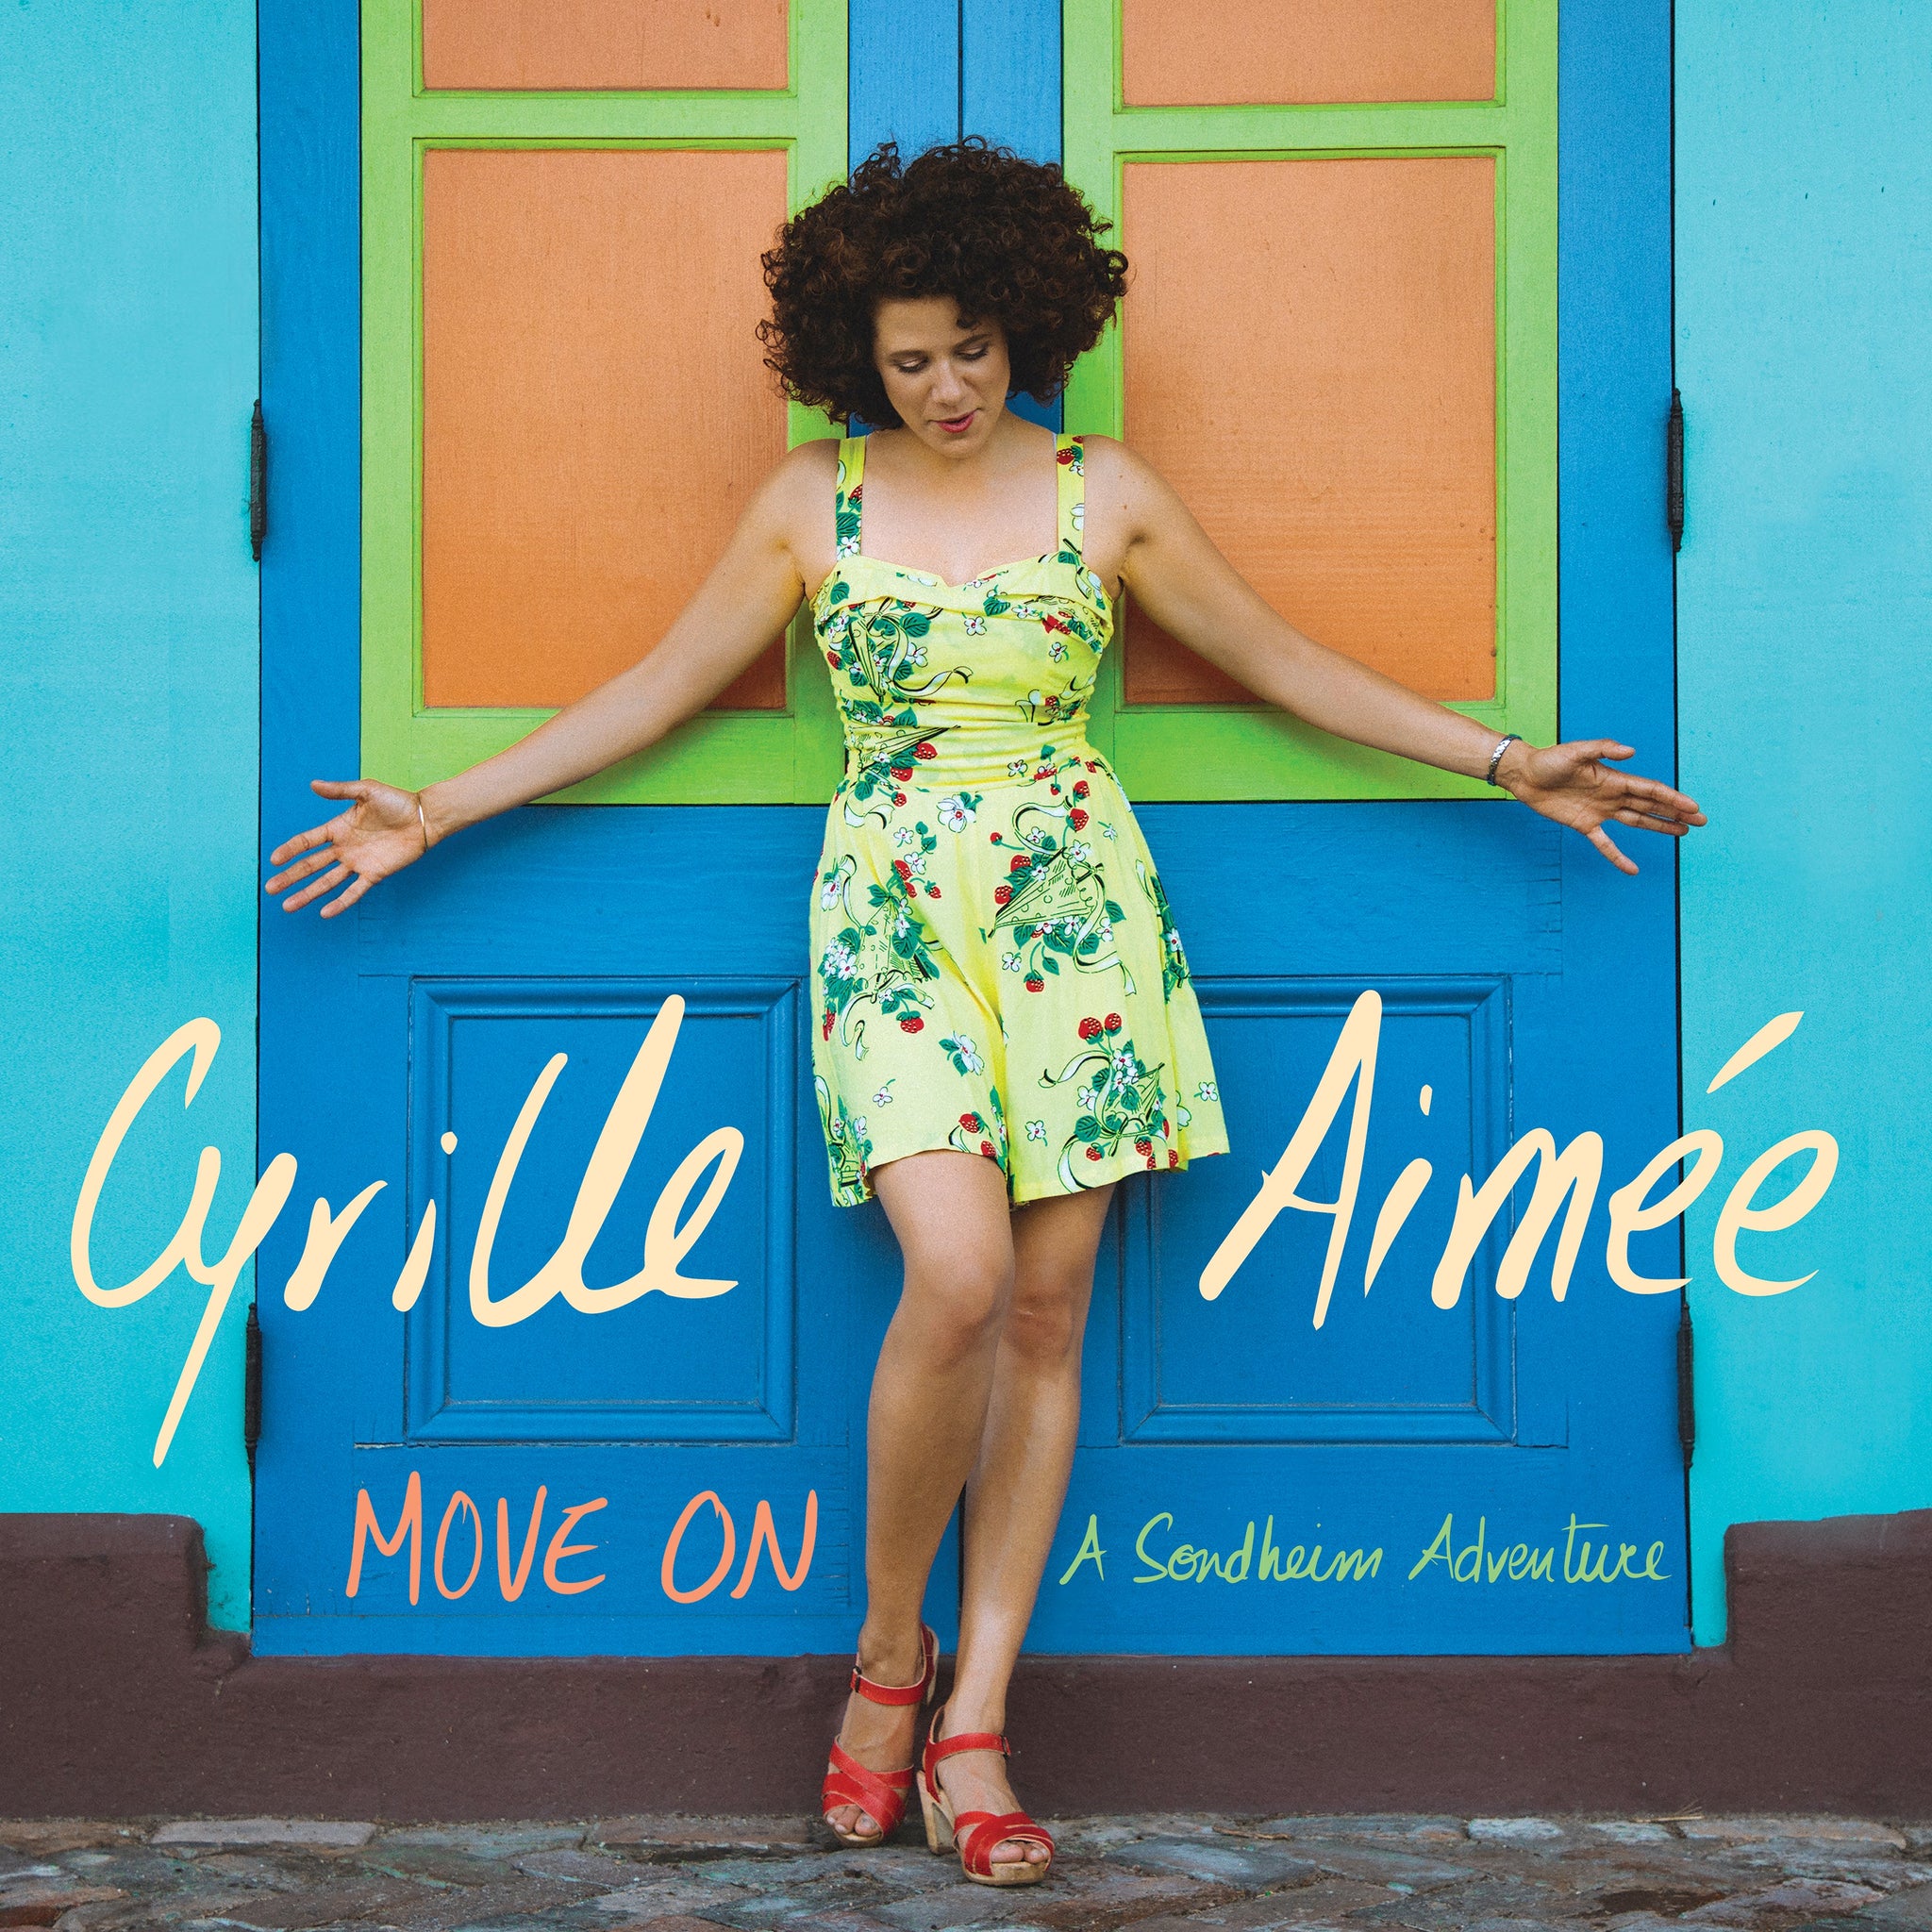 Cyrille Aimée - Move On: A Sondheim Adventure